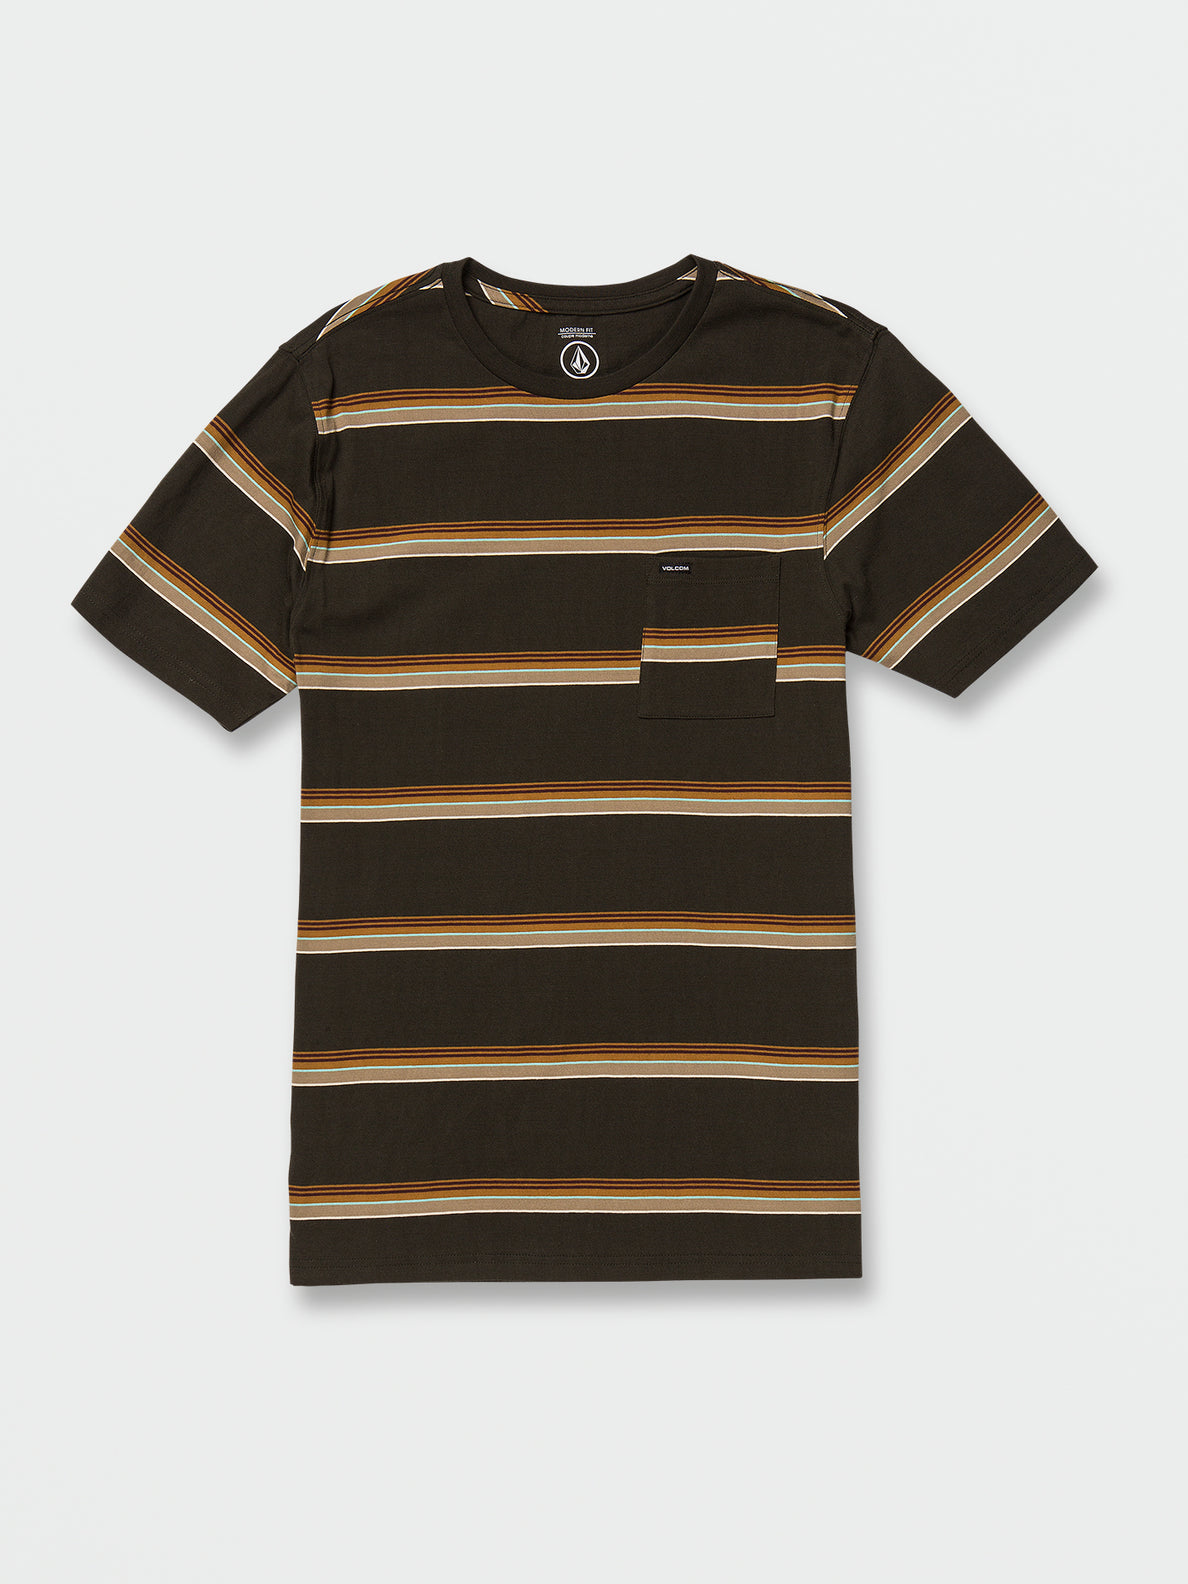 Outstoned Crew Short Sleeve Shirt - Rinsed Black (A0142201_RIB) [F]